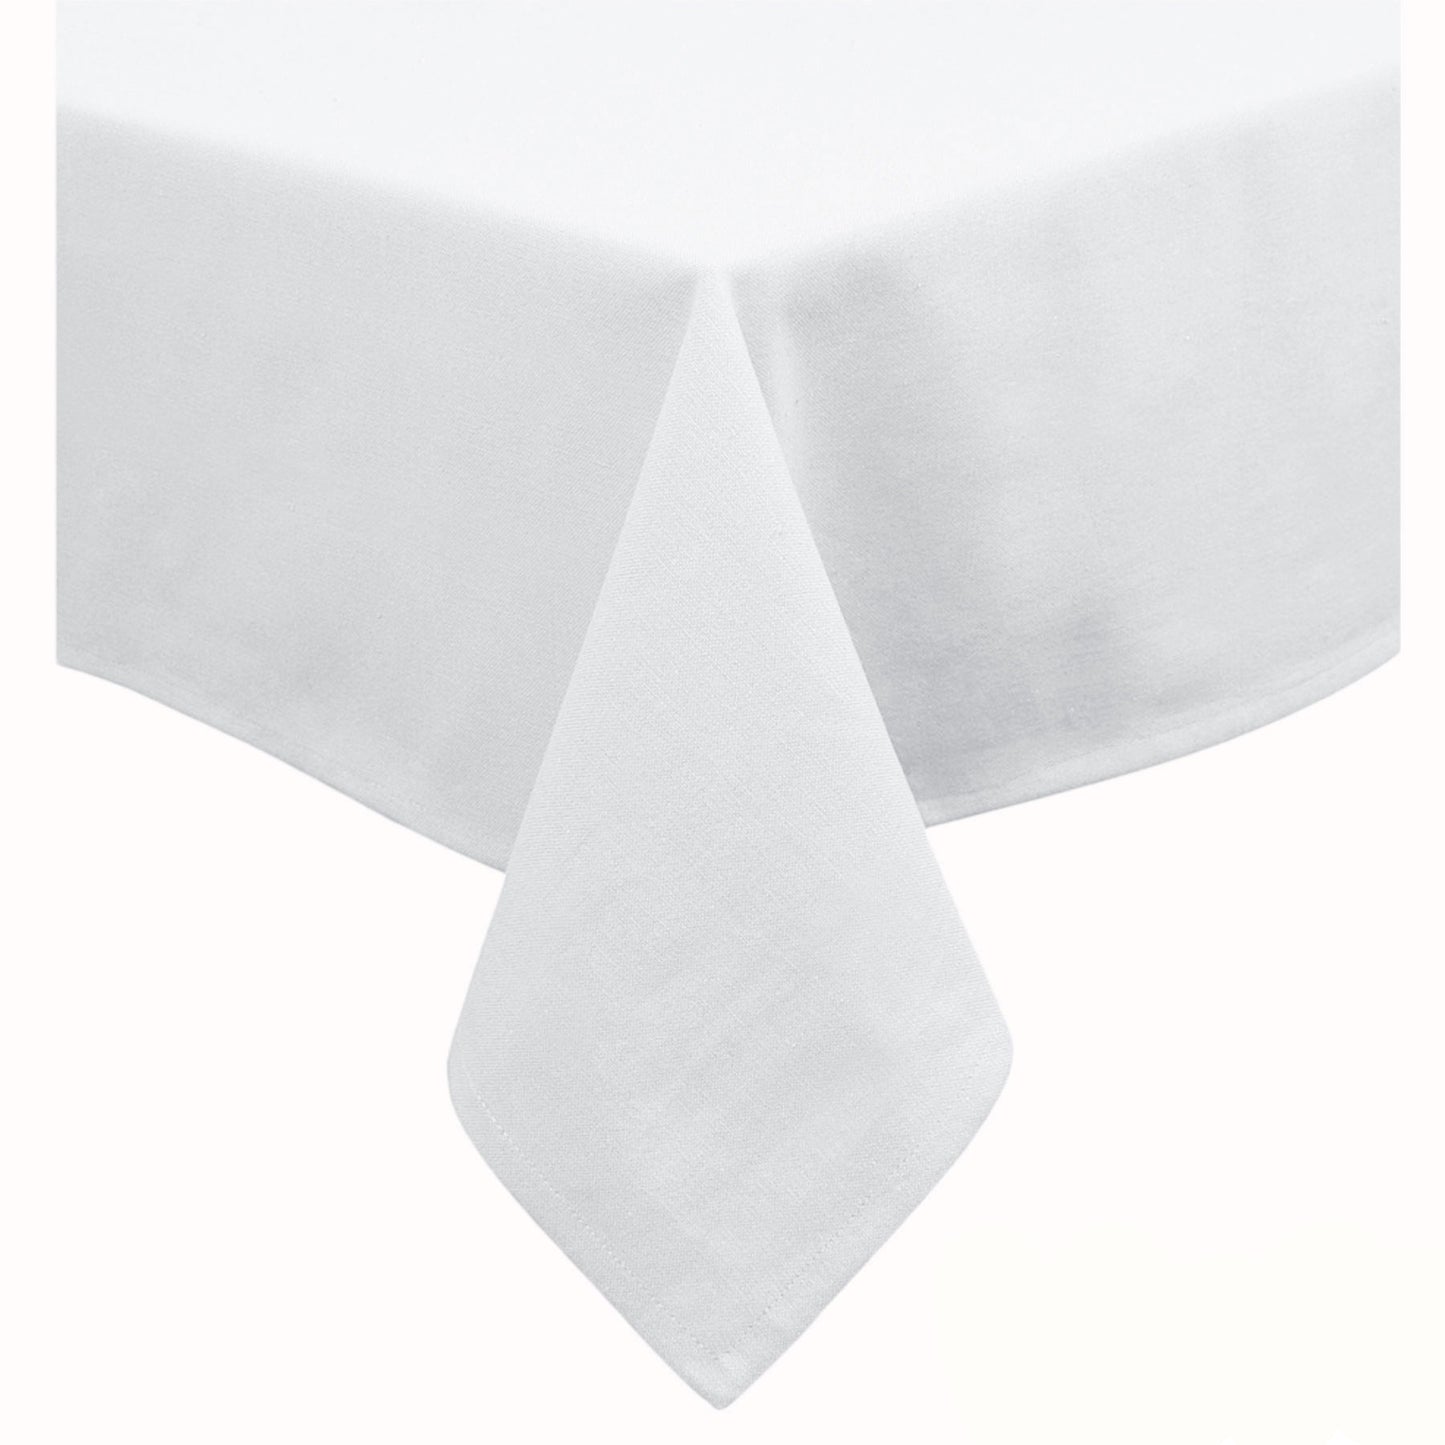 Hoydu Cotton Blend Table Cloth 180cm Round - BRIGHT WHITE